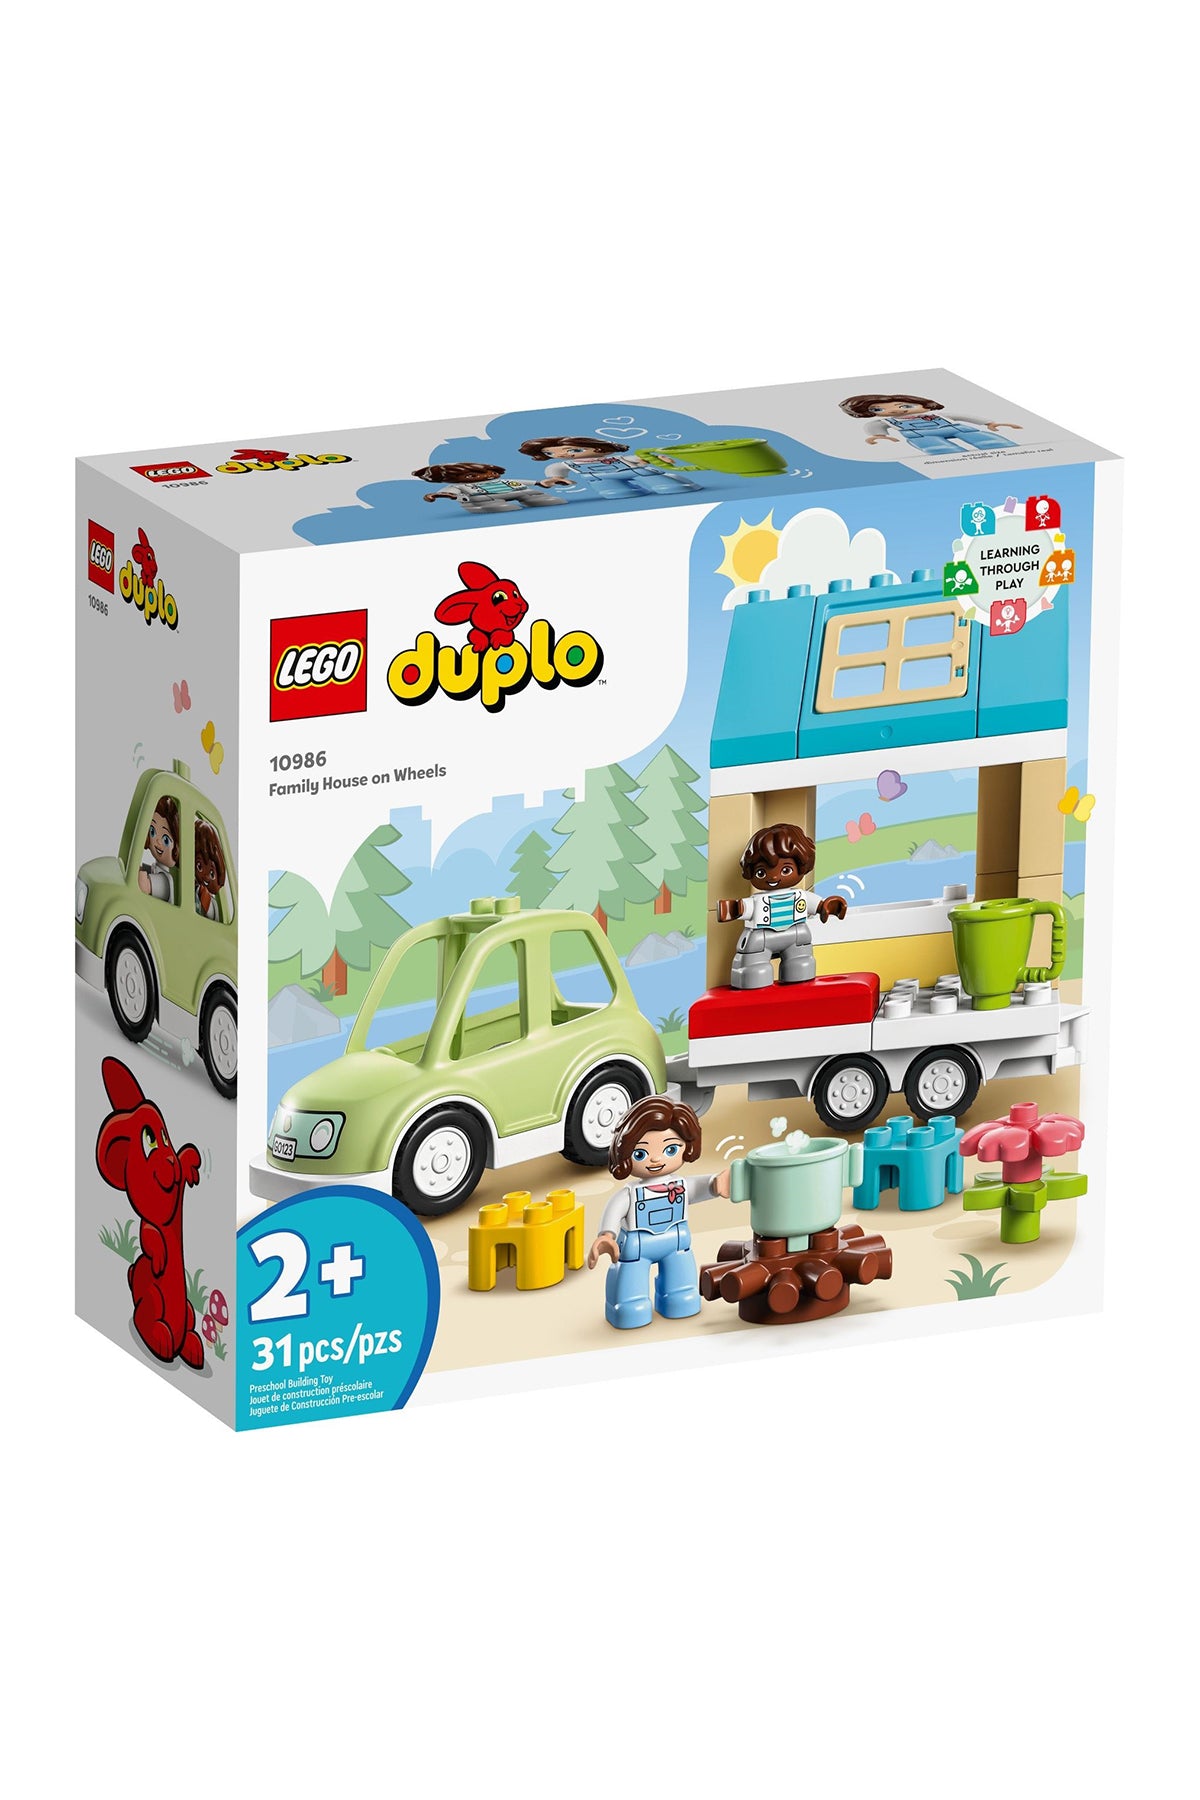 Lego Duplo : Family House On Wheels